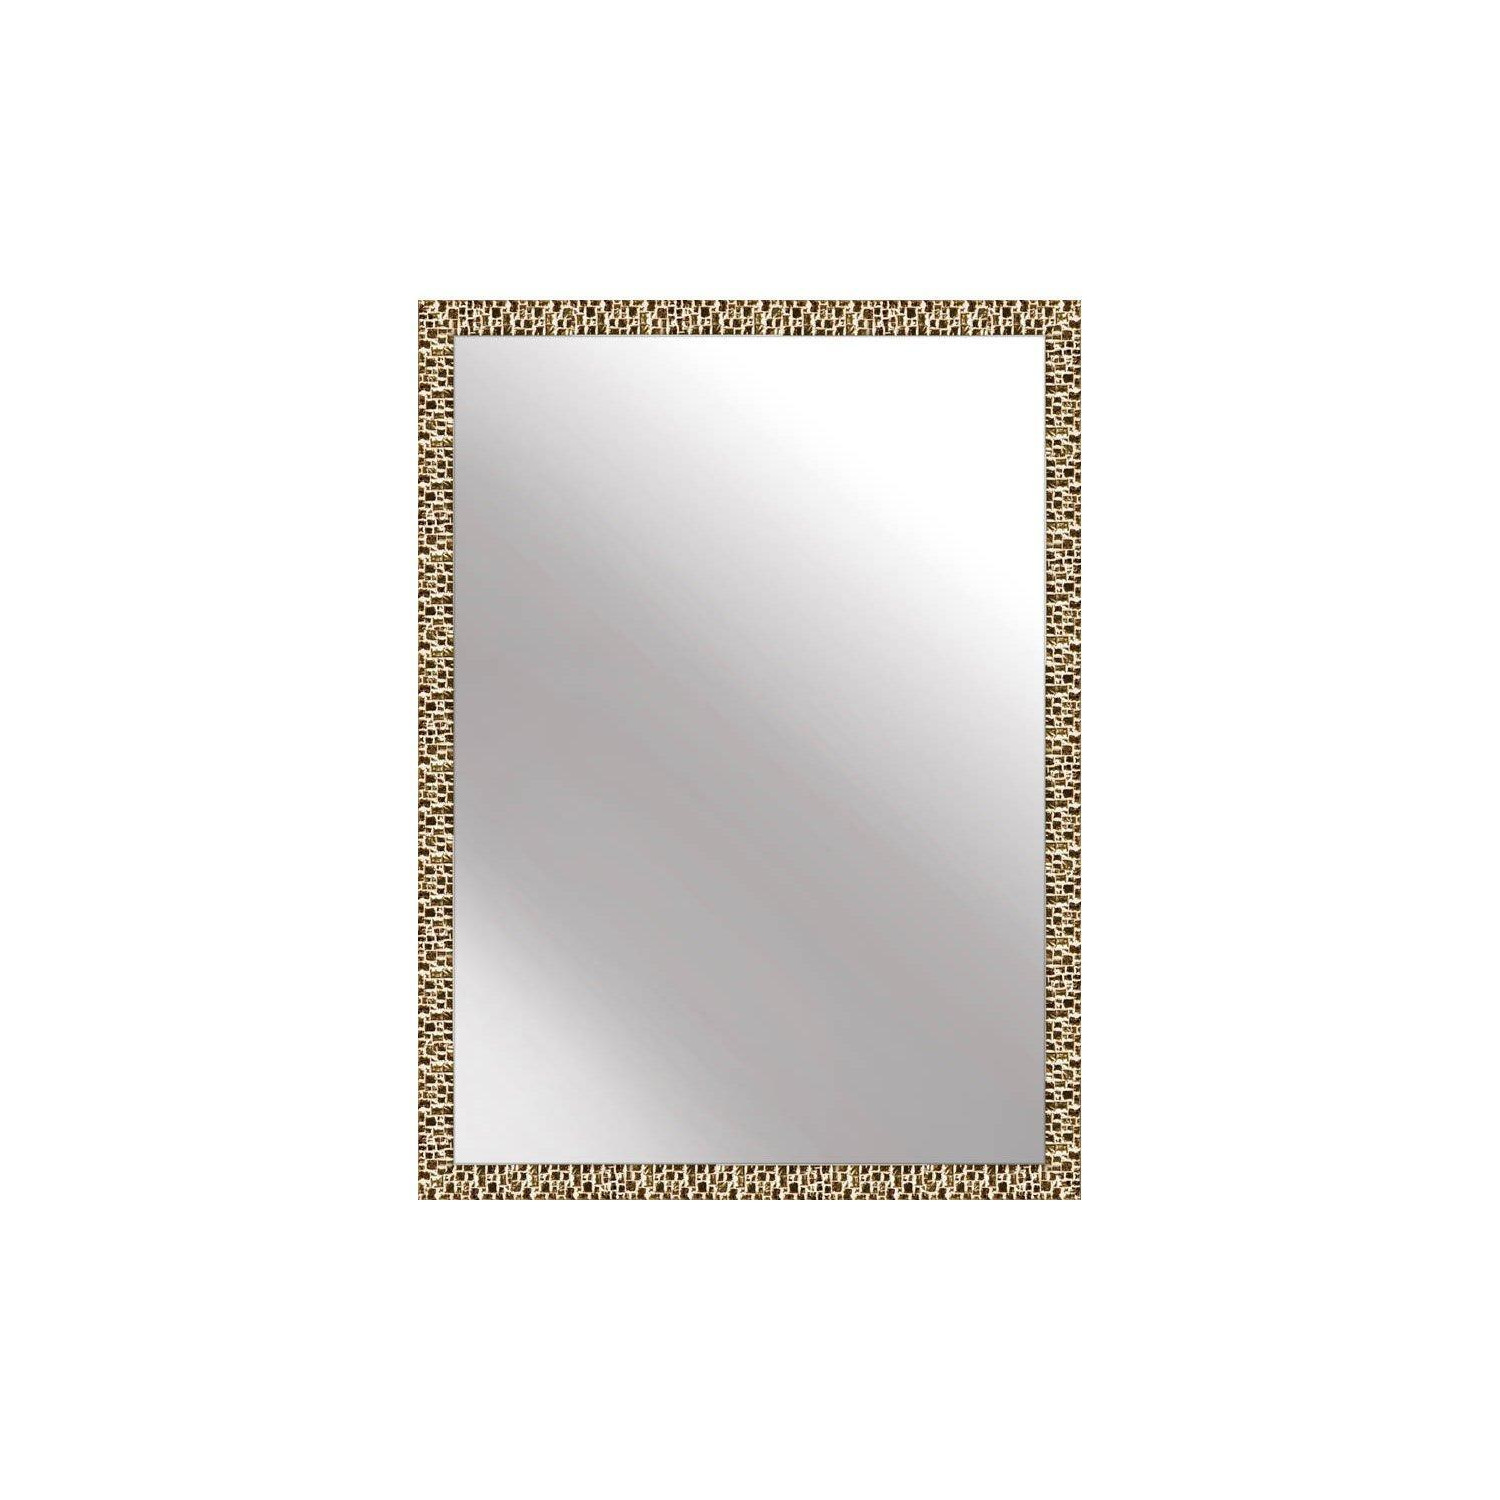 Florentina Wall Mirror With Mosaic Design Frame, 50 x 70cm - image 1